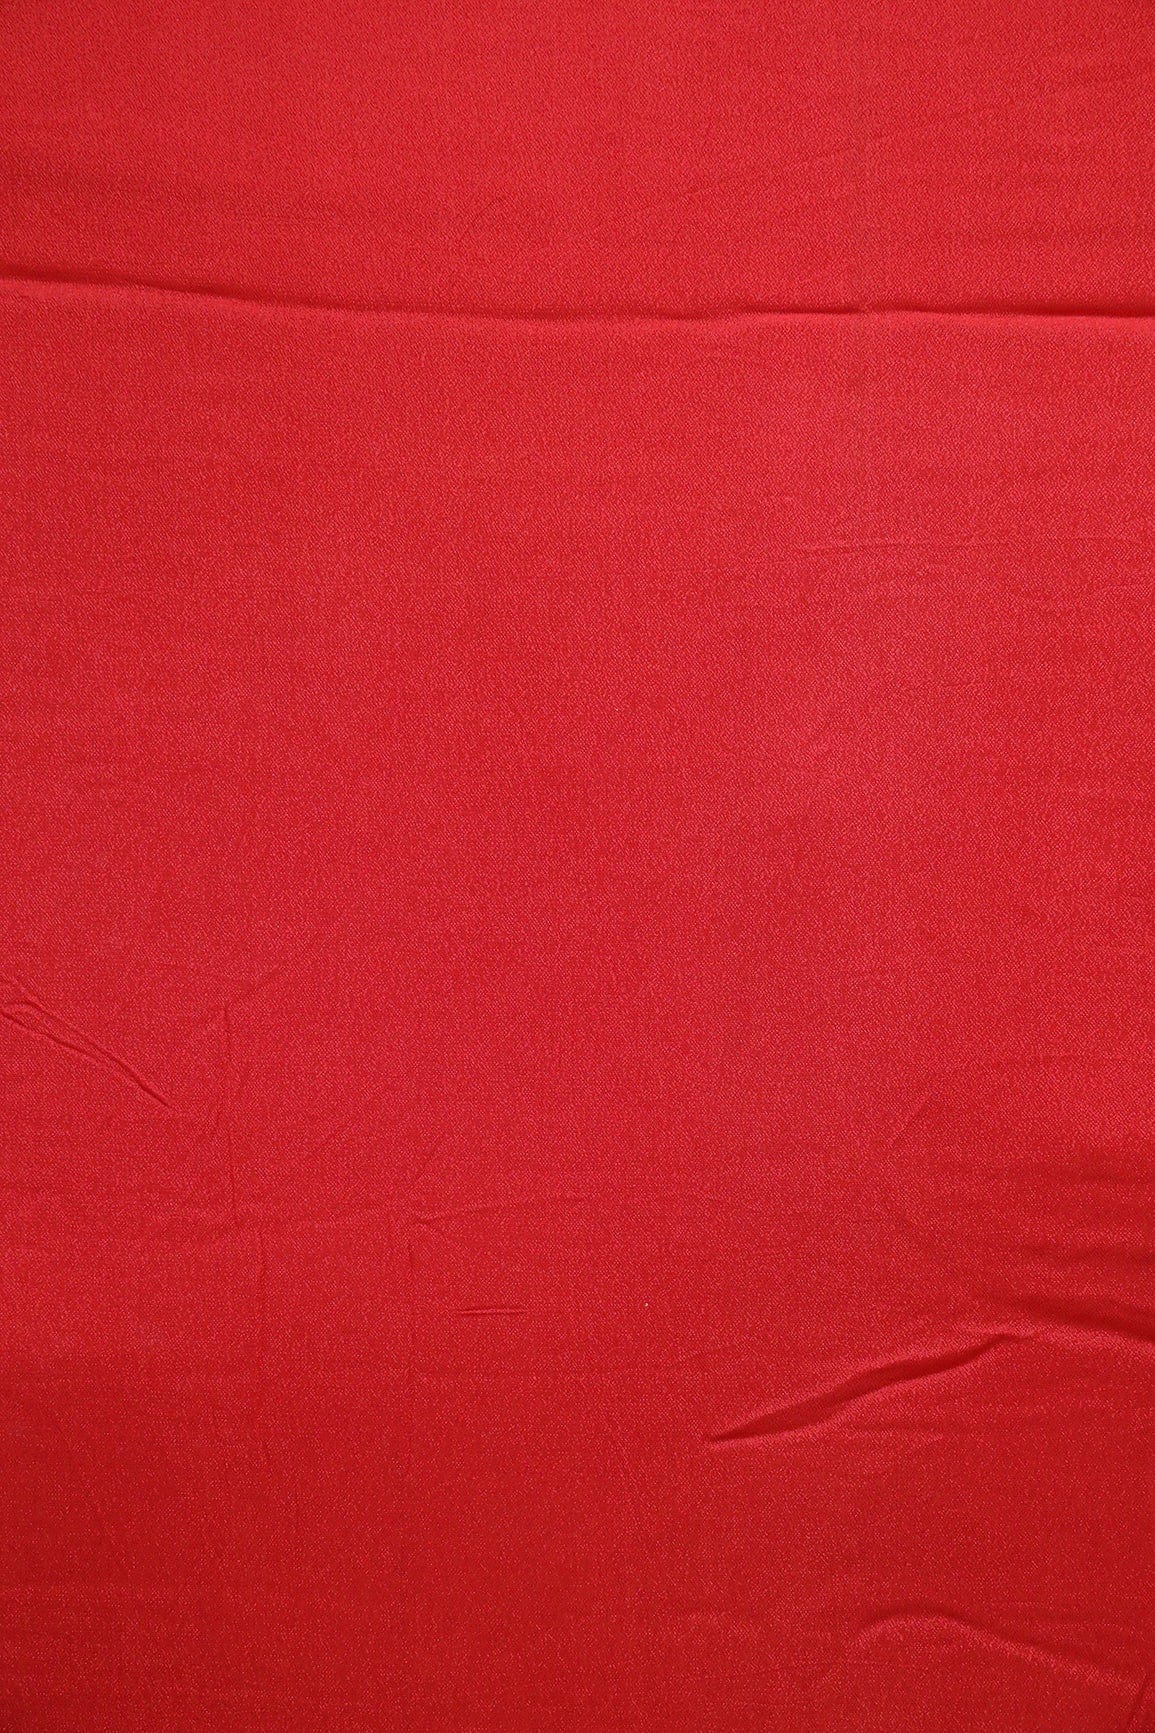 doeraa Plain Fabrics Red Dyed Viscose Georgette Fabric